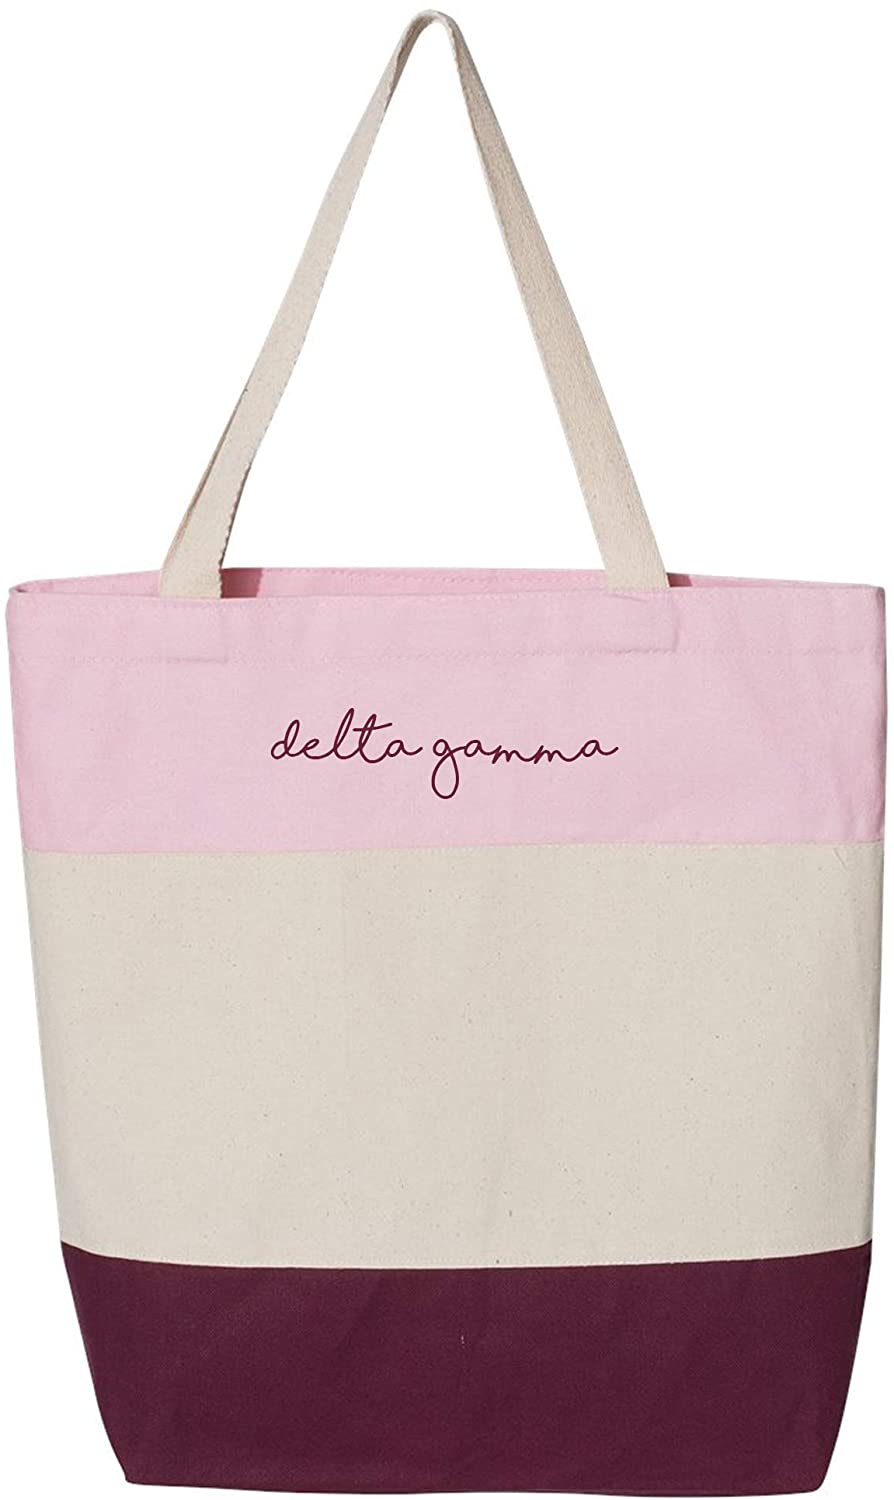 Price:$24.95    Delta Gamma - Sorority Tote Bag  Clothing